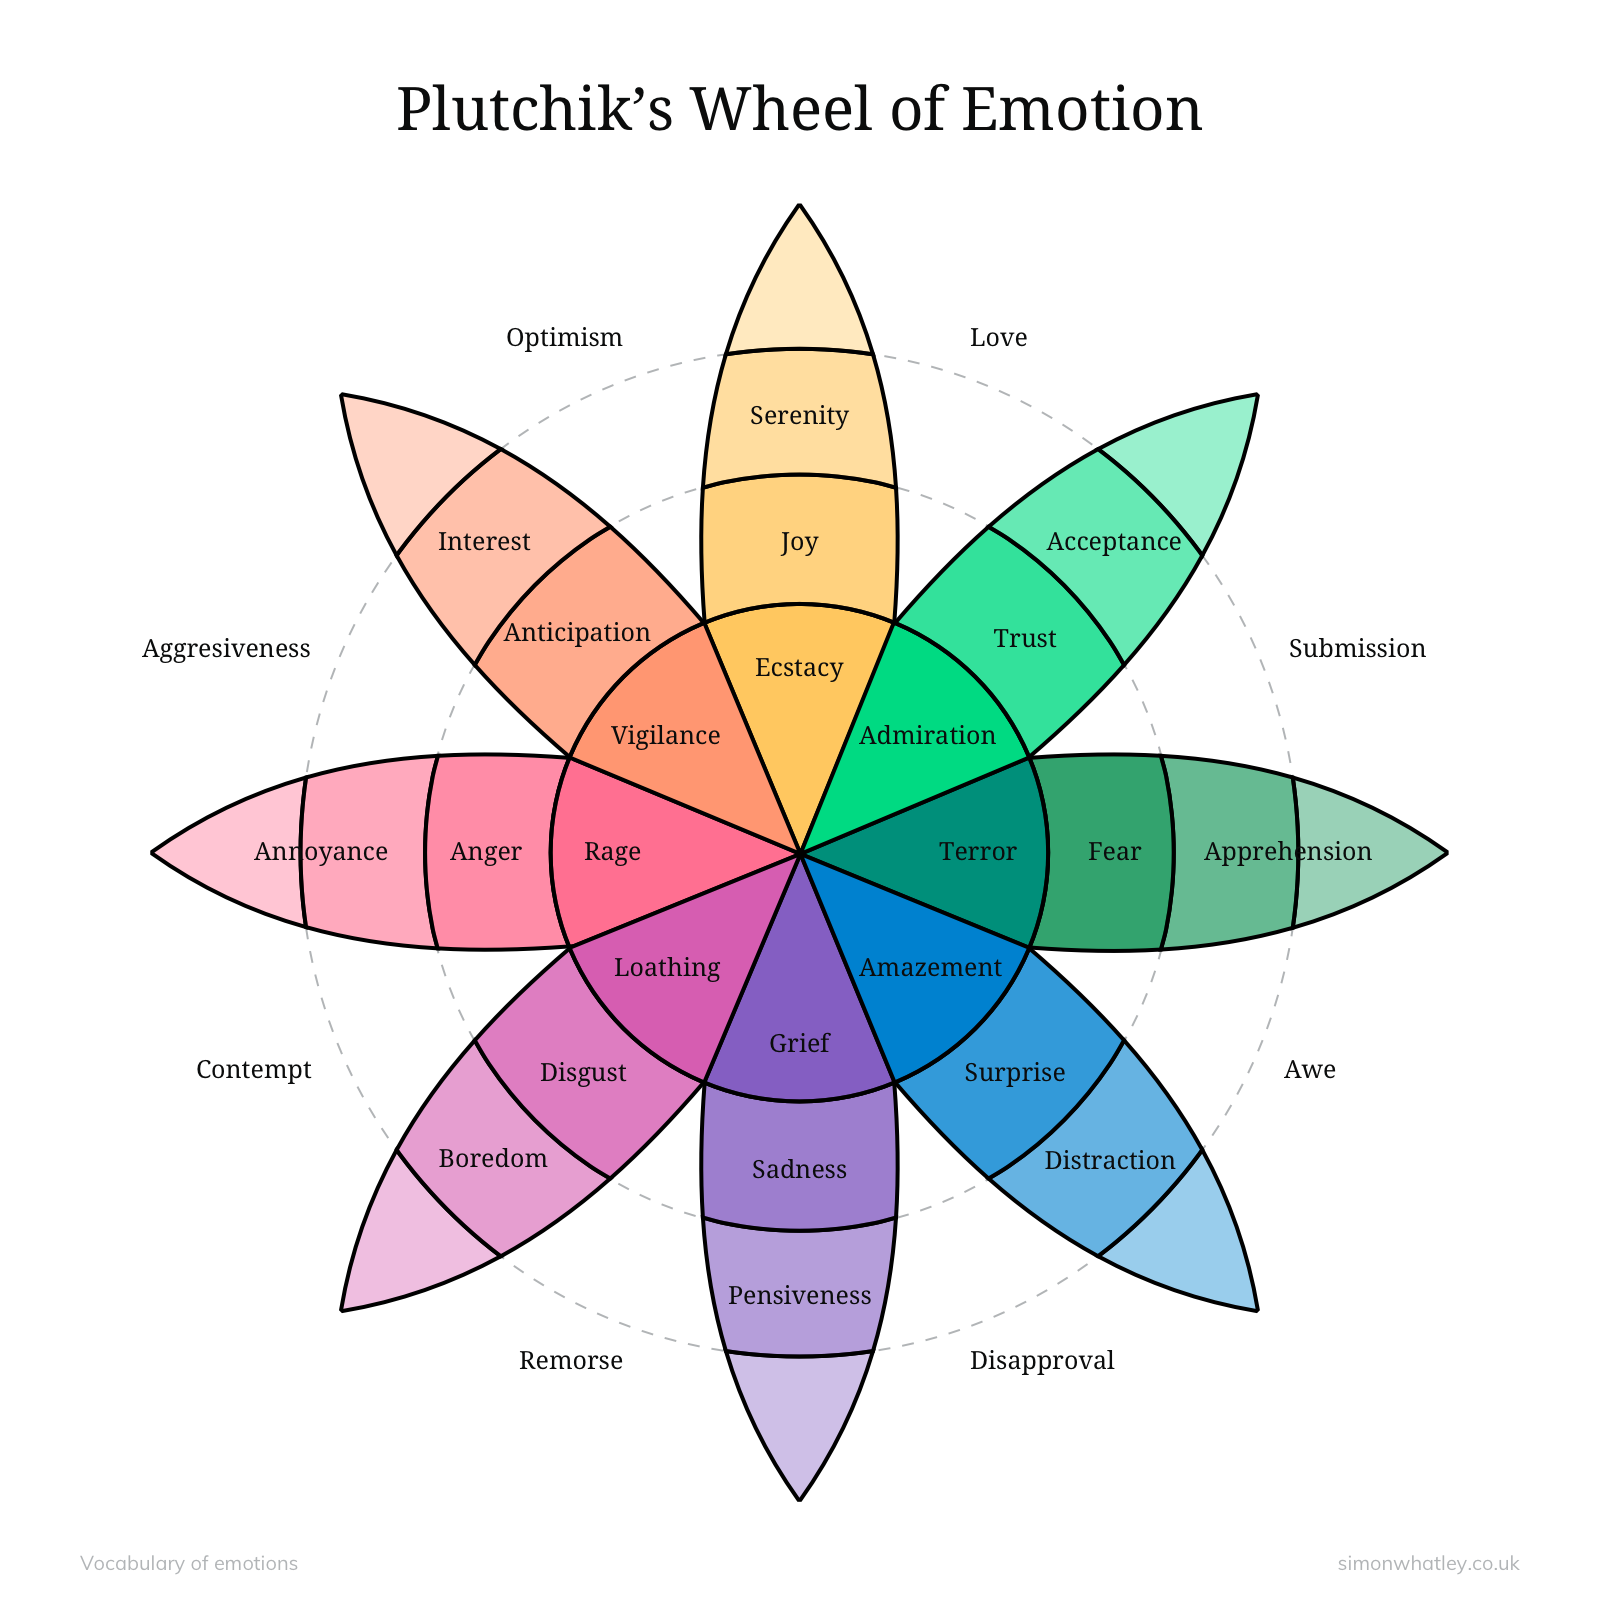 Plutchik’s wheel of emotion